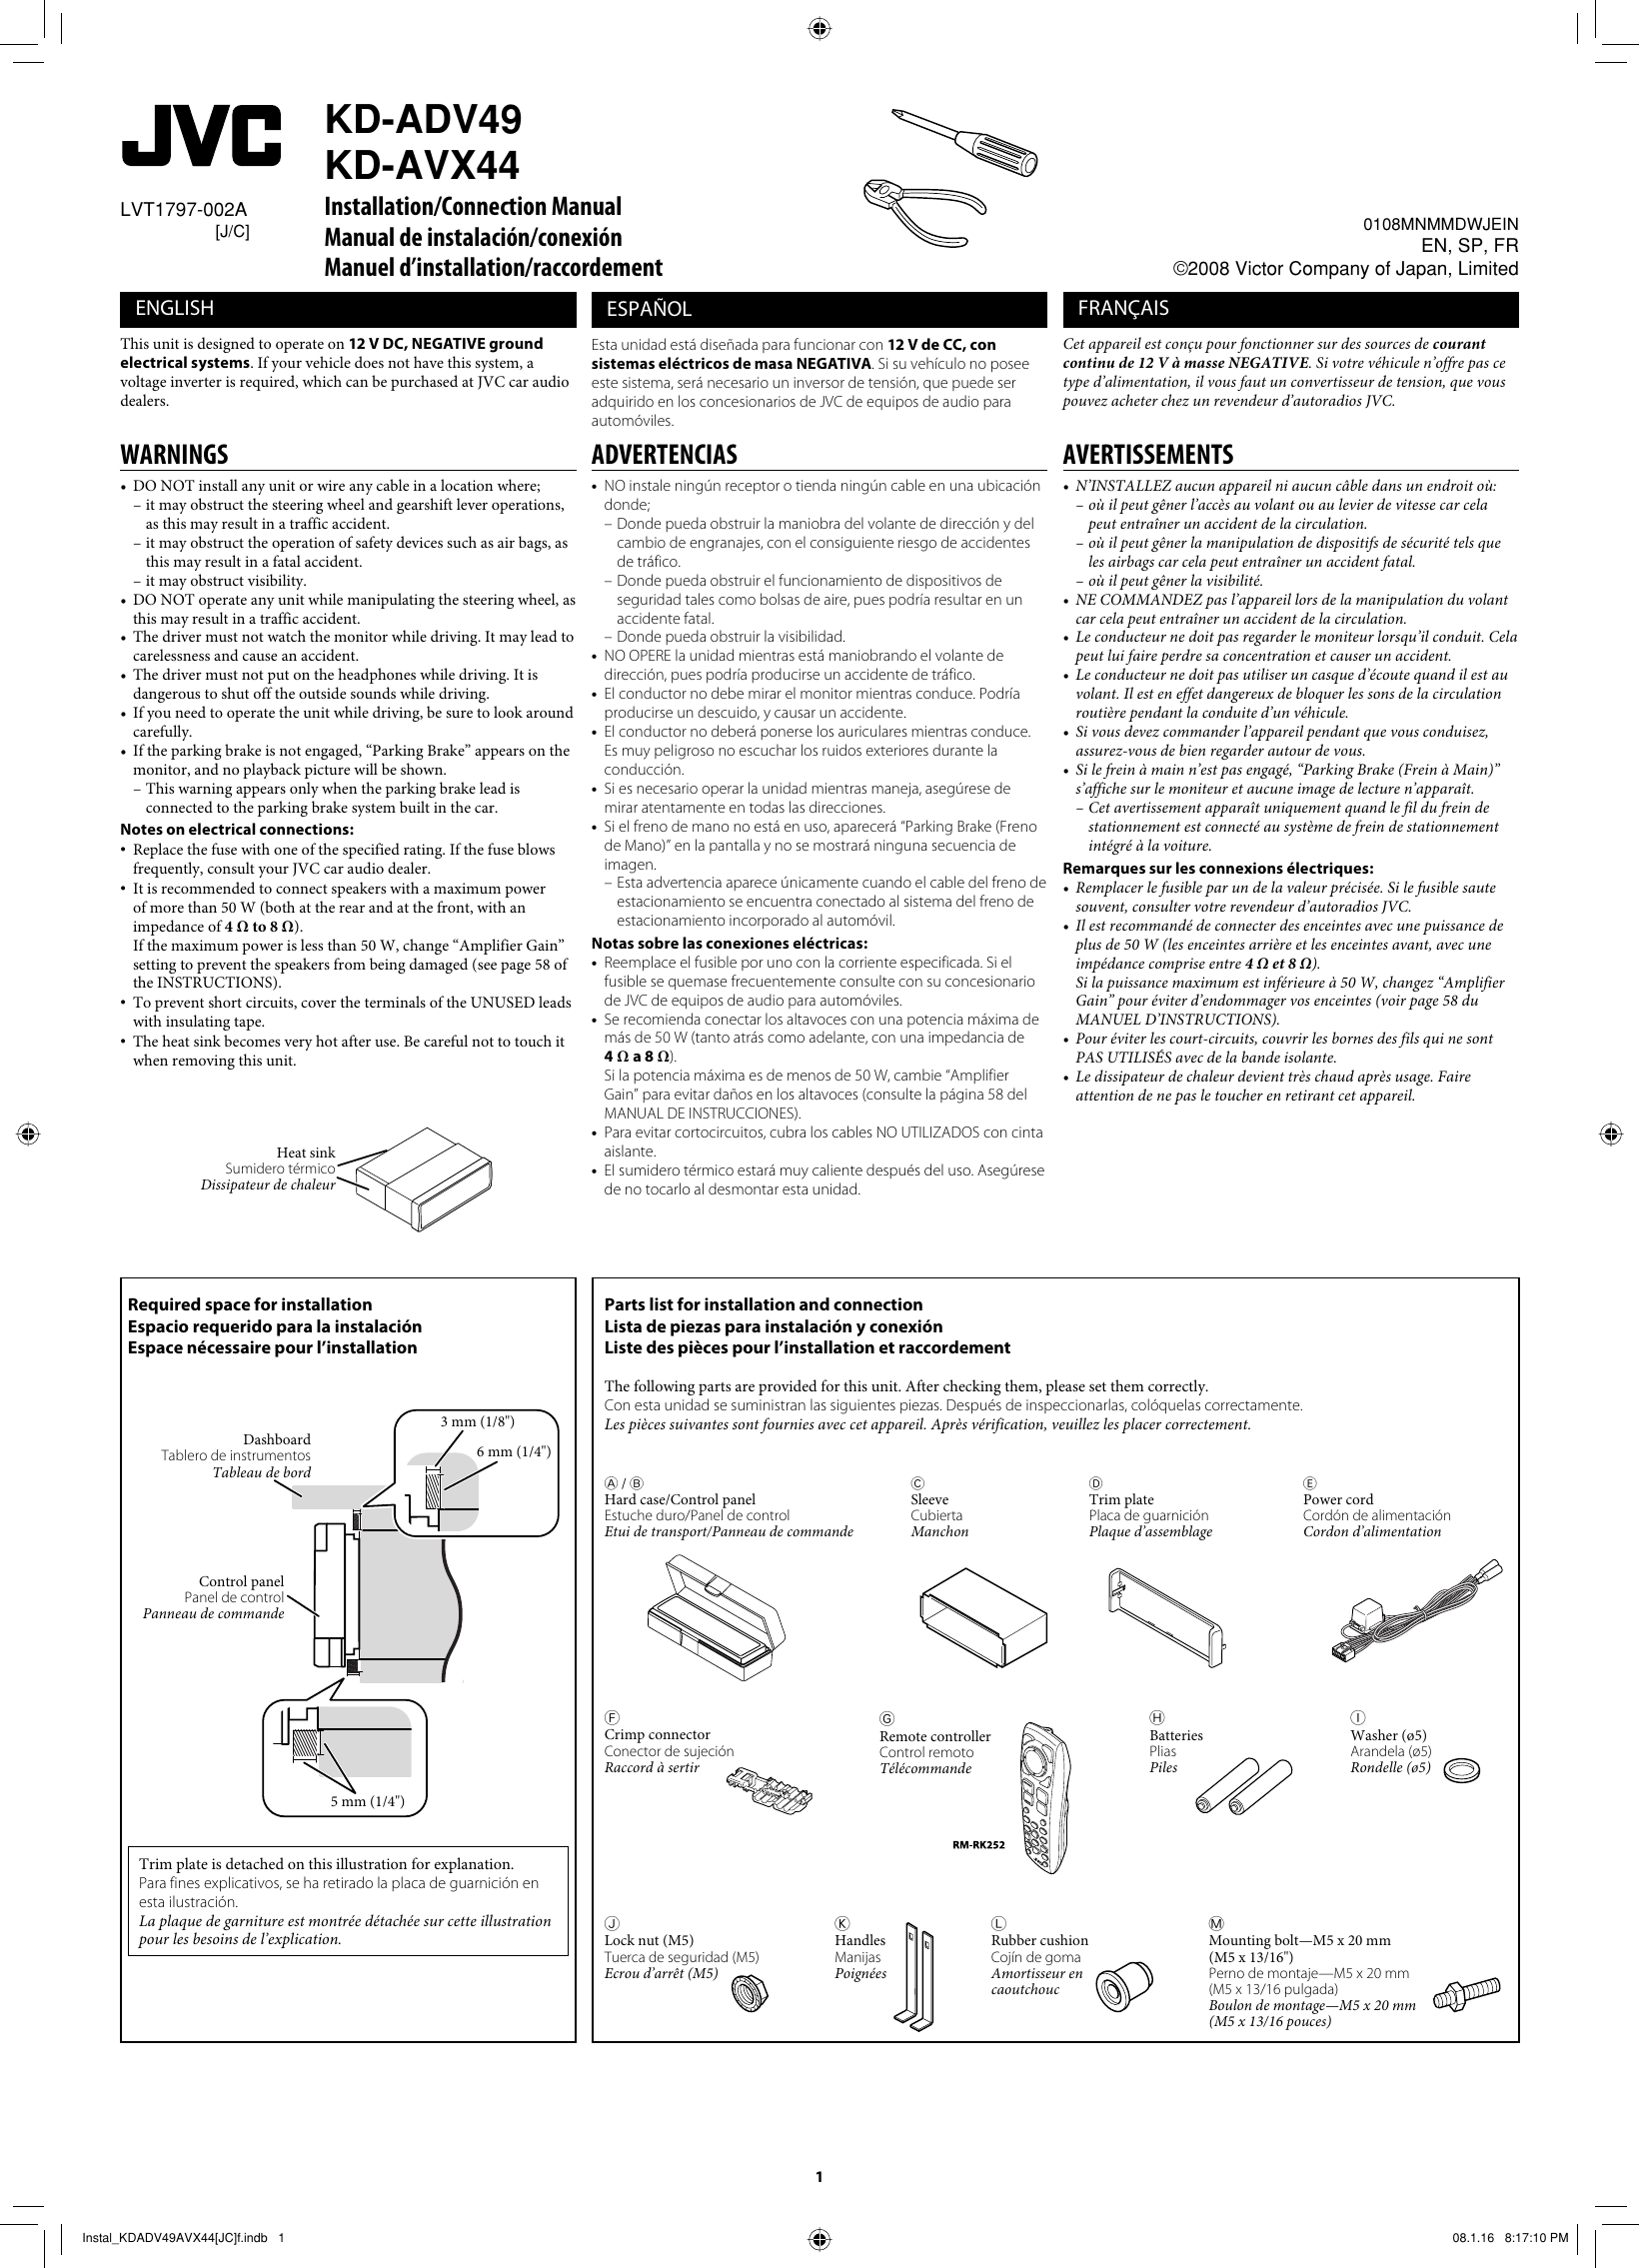 Page 1 of 6 - Jvc Jvc-Kd-Adv49-Installation-Manual- KD-ADV49/KD-AVX44  Jvc-kd-adv49-installation-manual